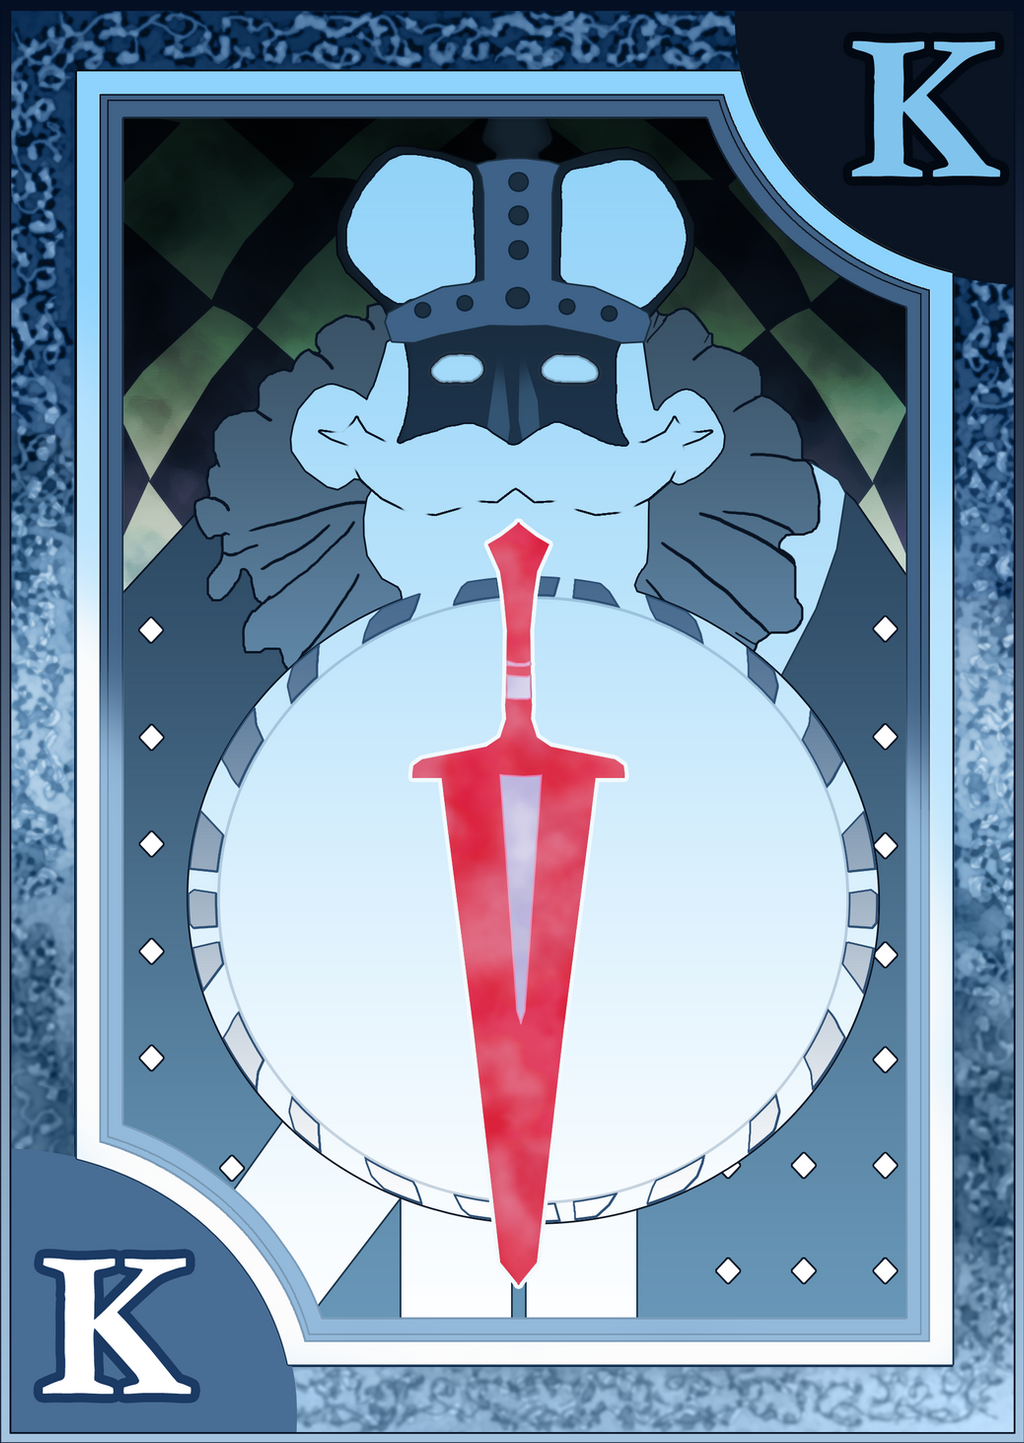 Persona 3/4 Tarot Card Deck HR - King of Swords by Enetirnel on DeviantArt